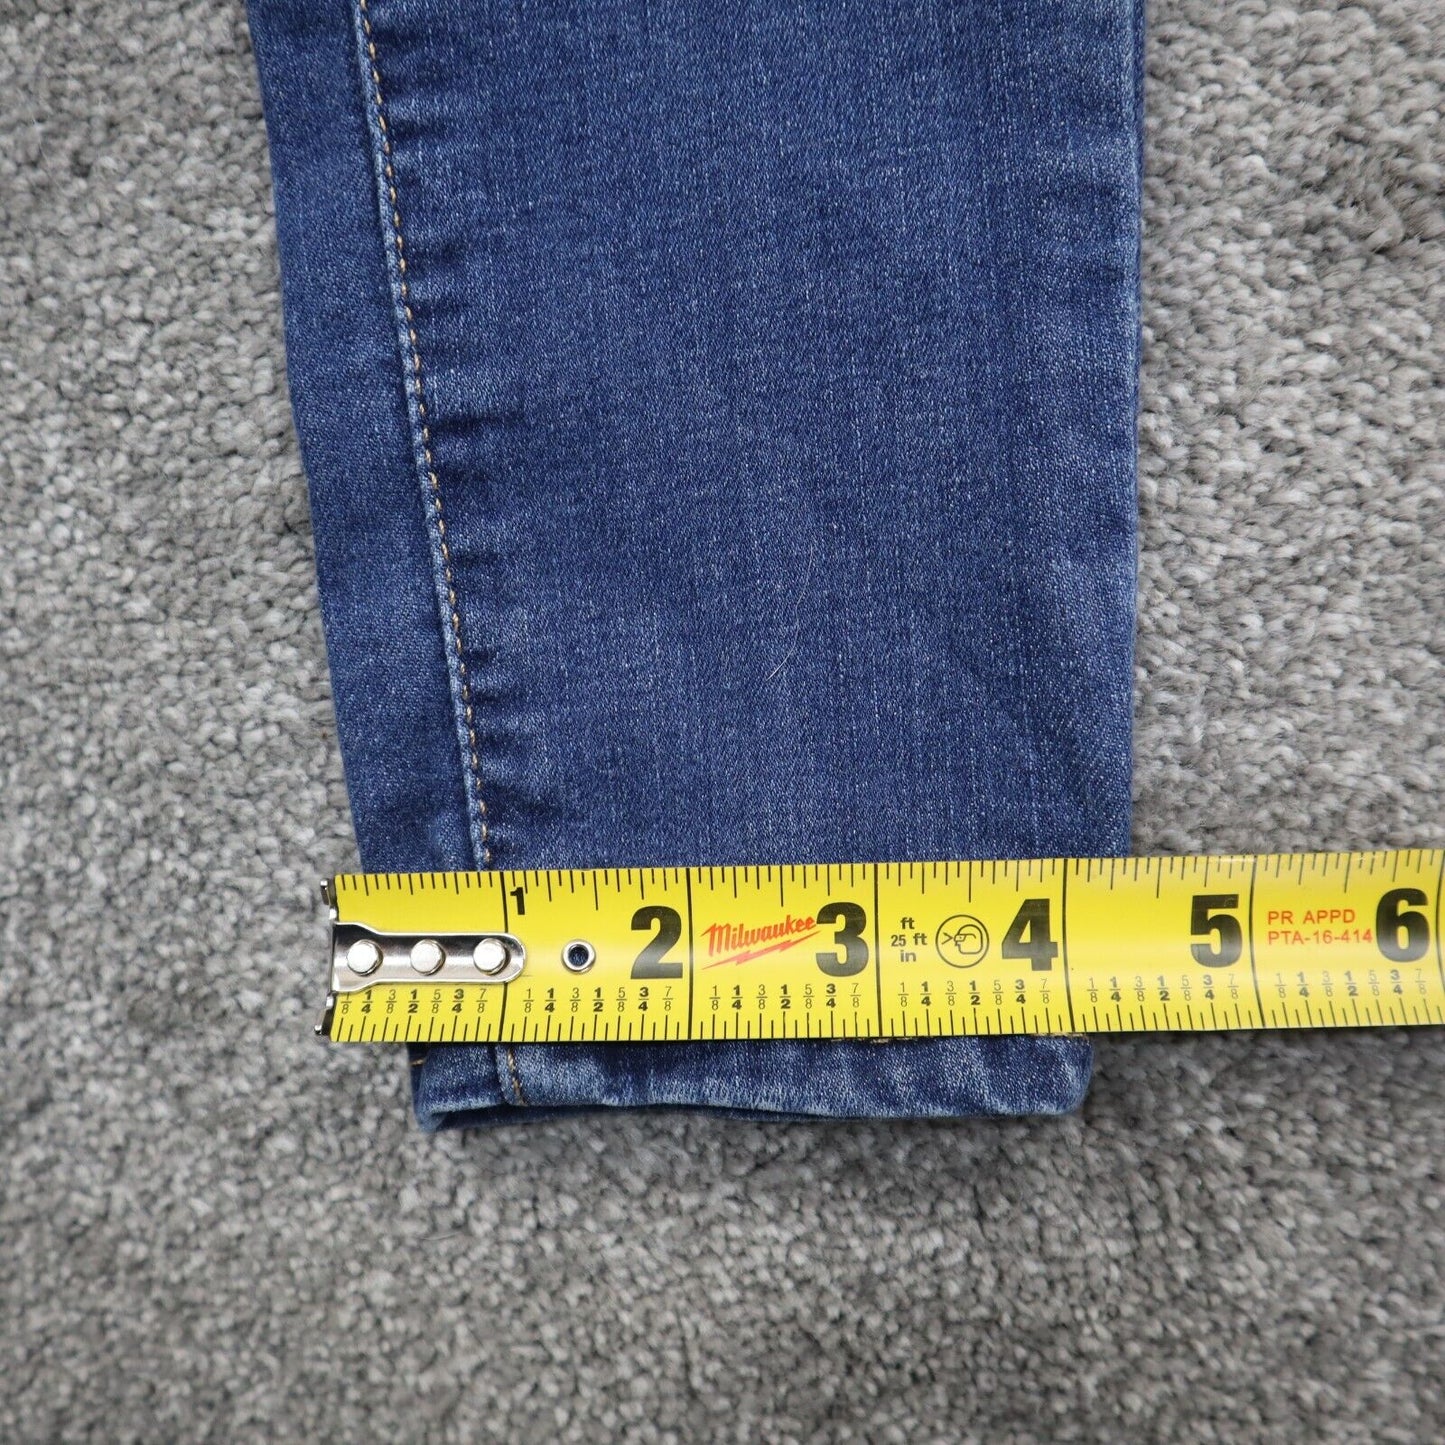 Levi Strauss Womens Stretch 720 Super Skinny Denim Jeans Mid Rise Blue Size 26